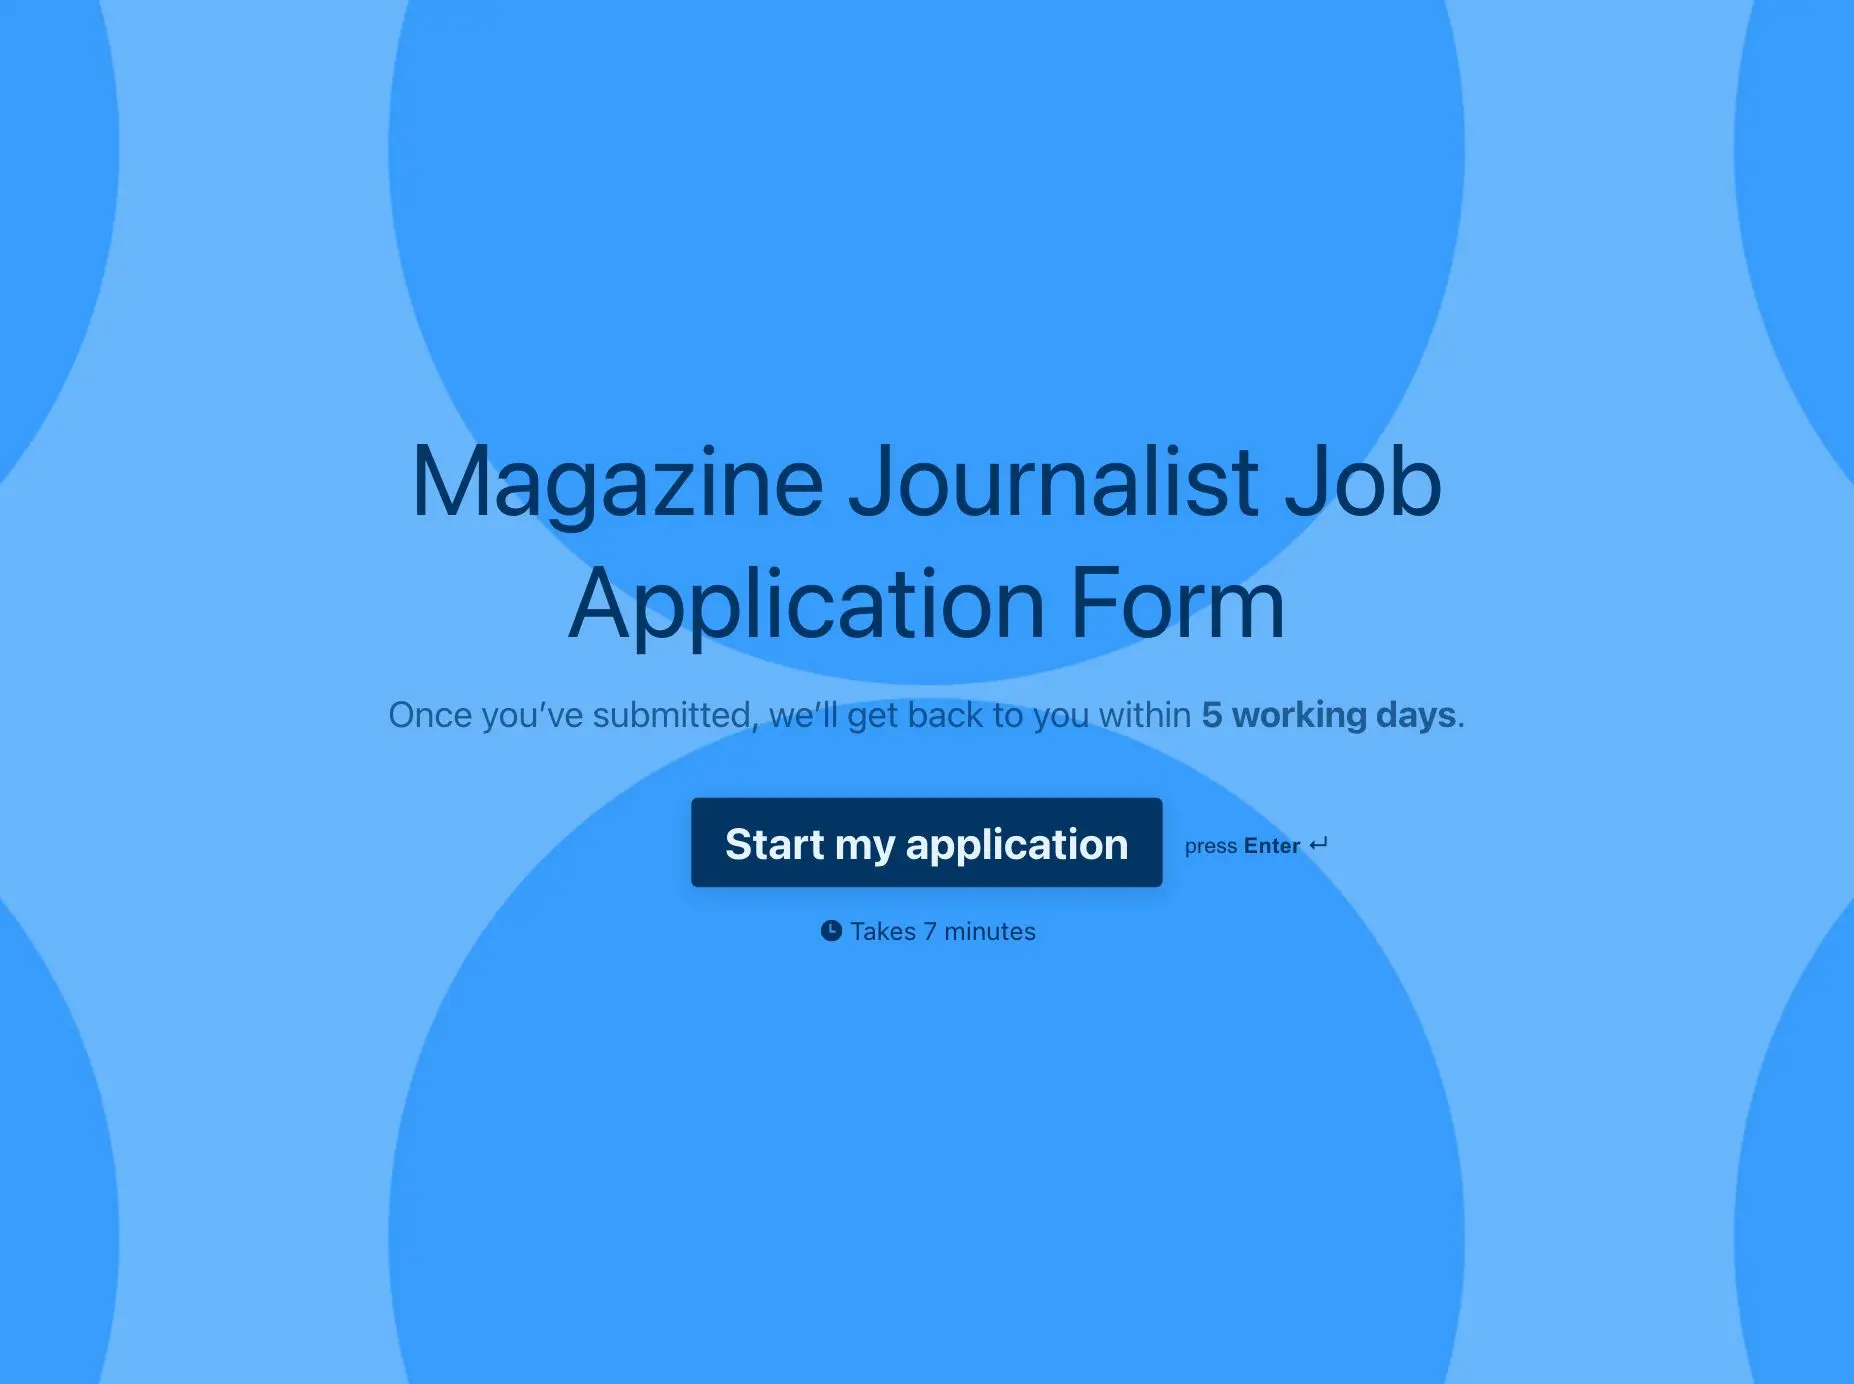 Magazine Journalist Job Application Form Template Hero